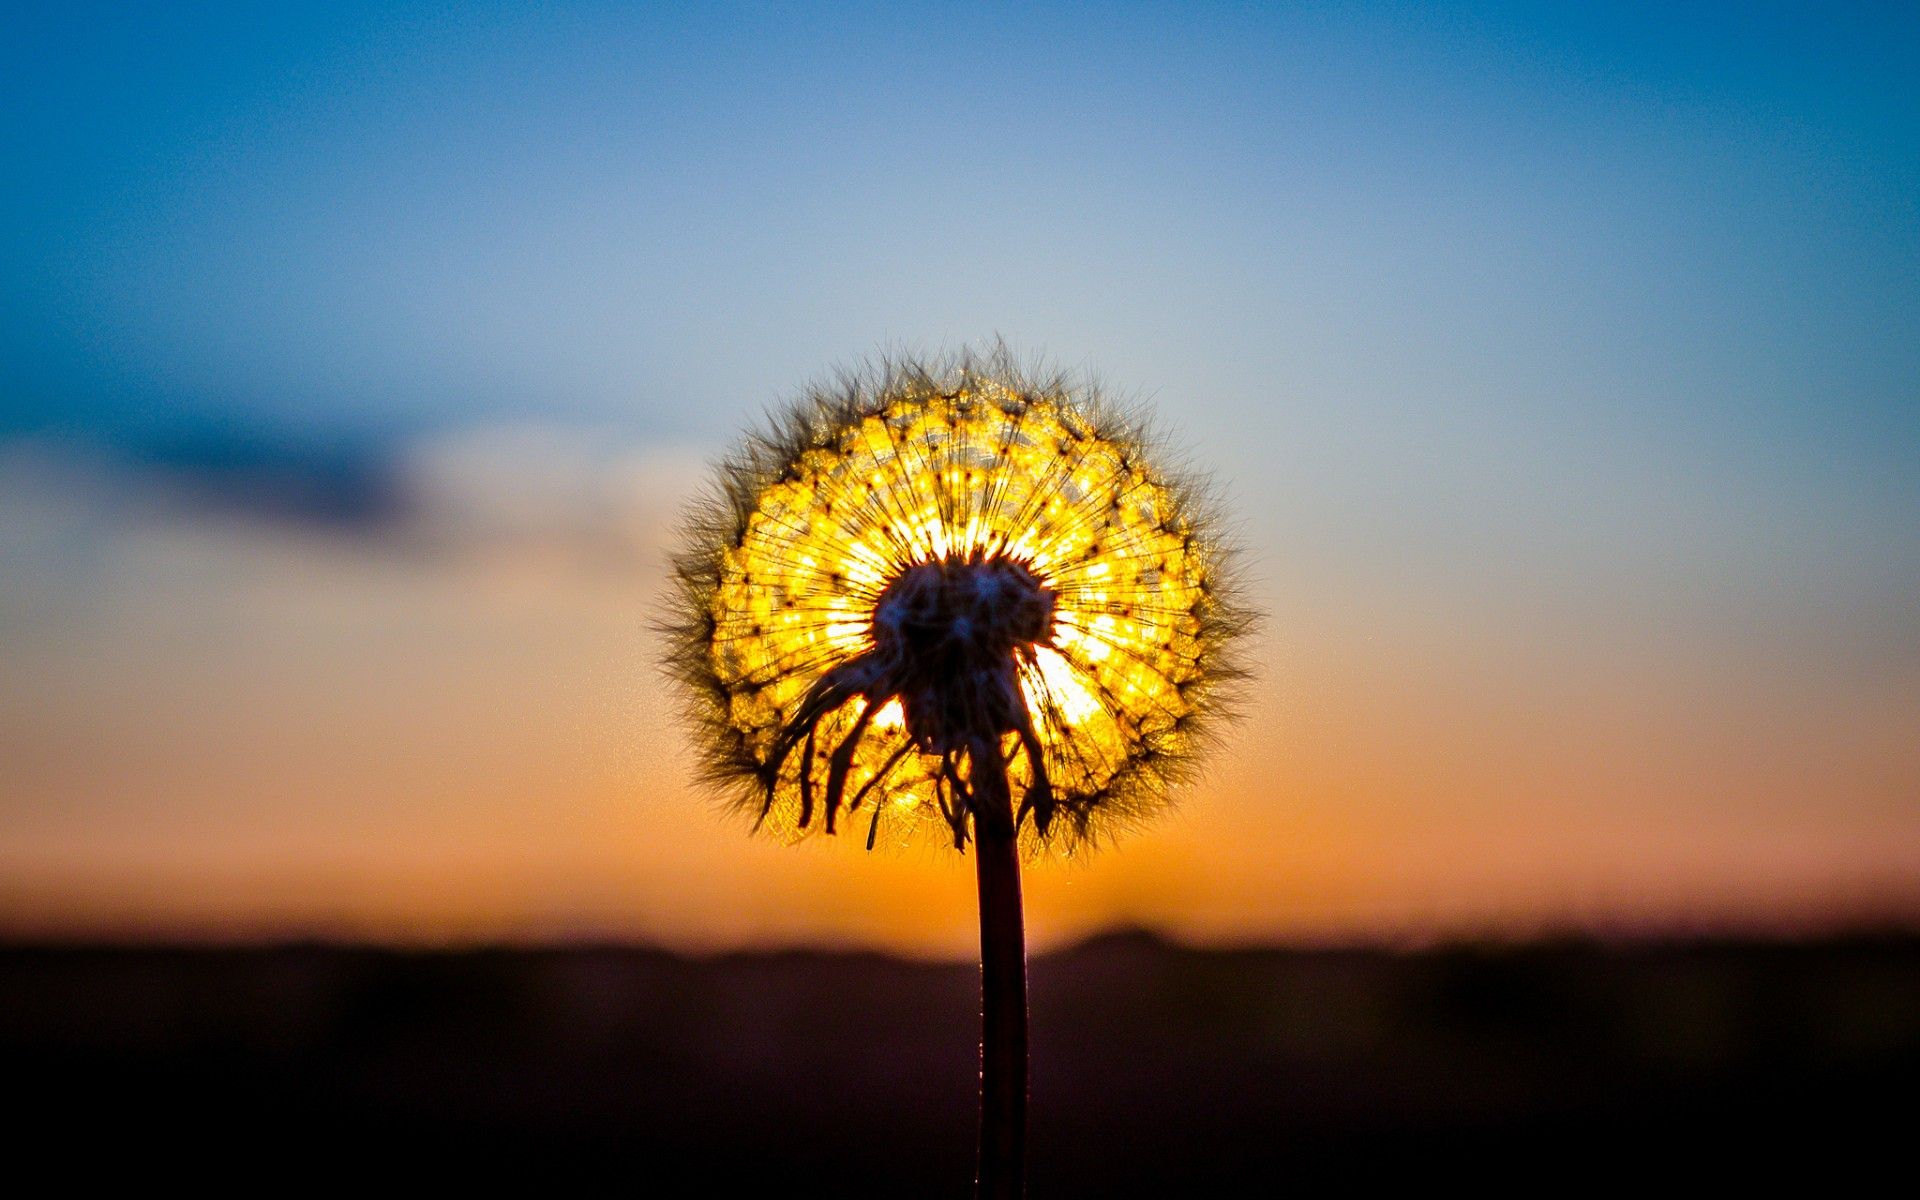 A dandelion in the sunset - Sun